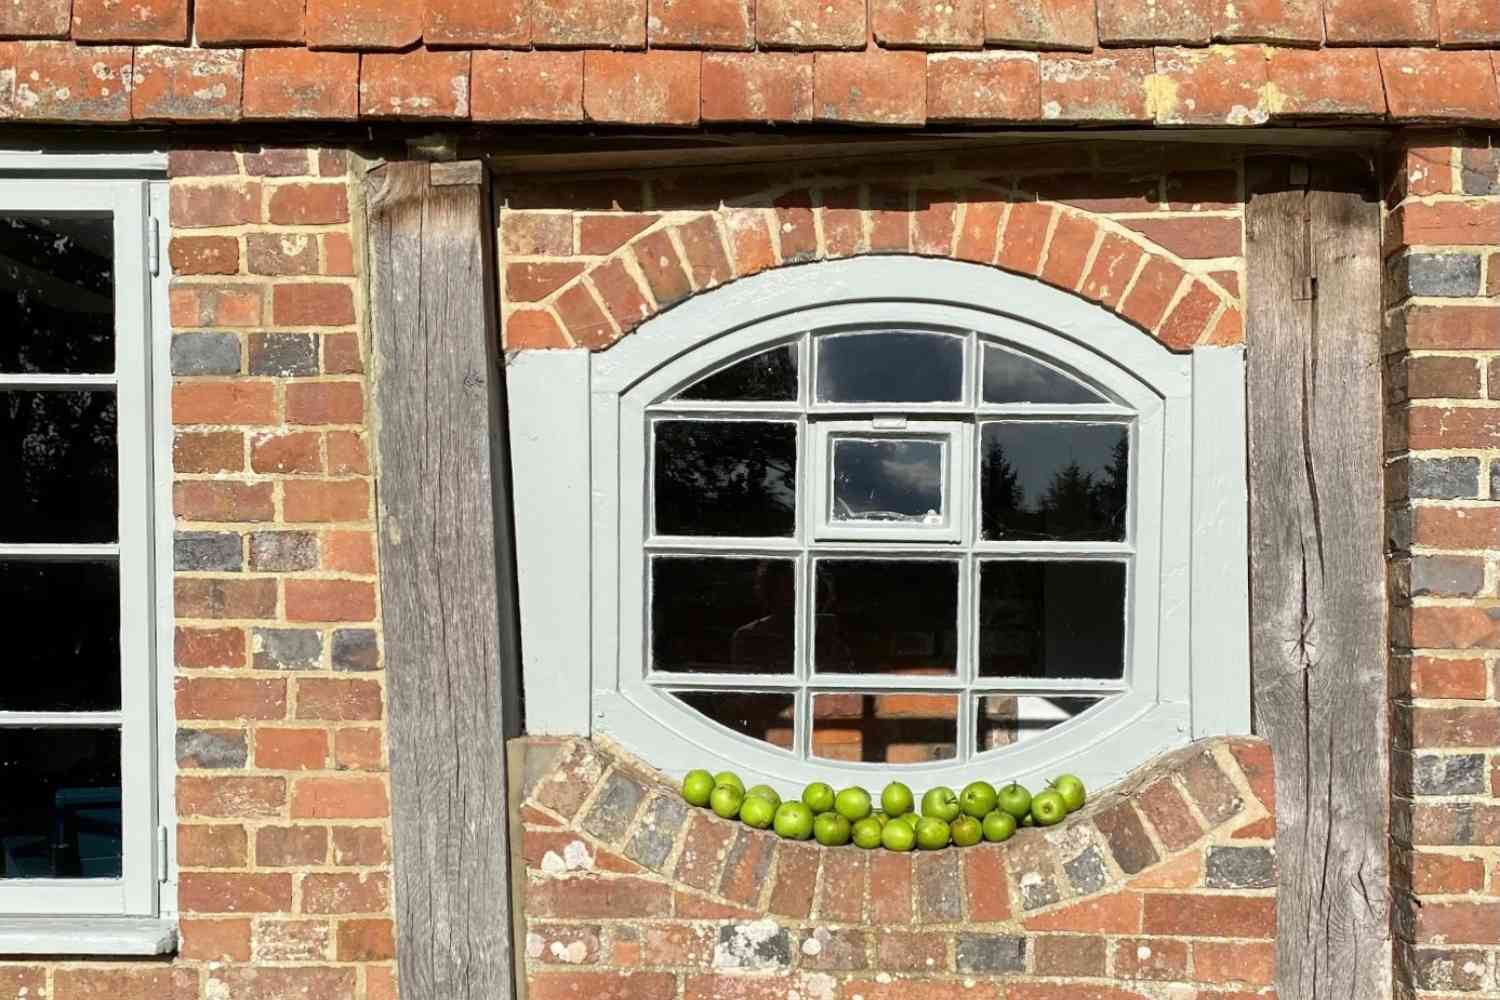 Apples on a windowsill